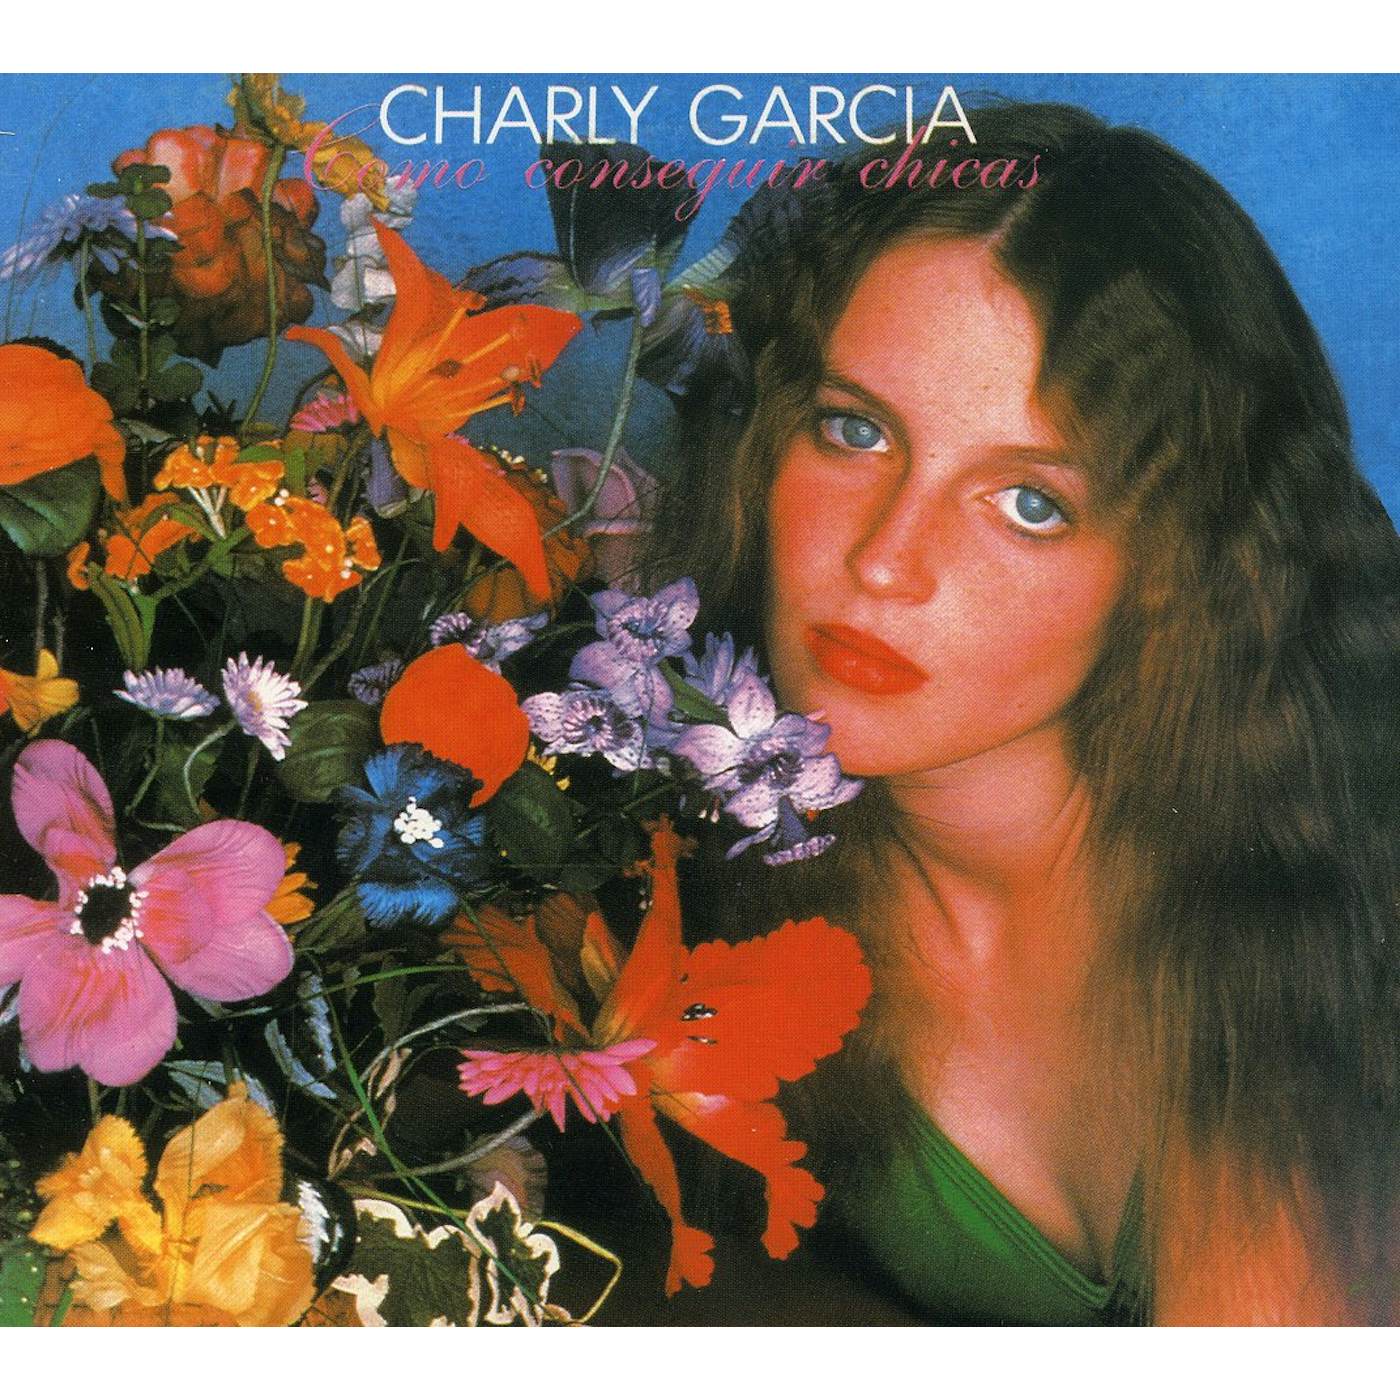 Charly Garcia Pena COMO CONSEGUIR CHICAS CD